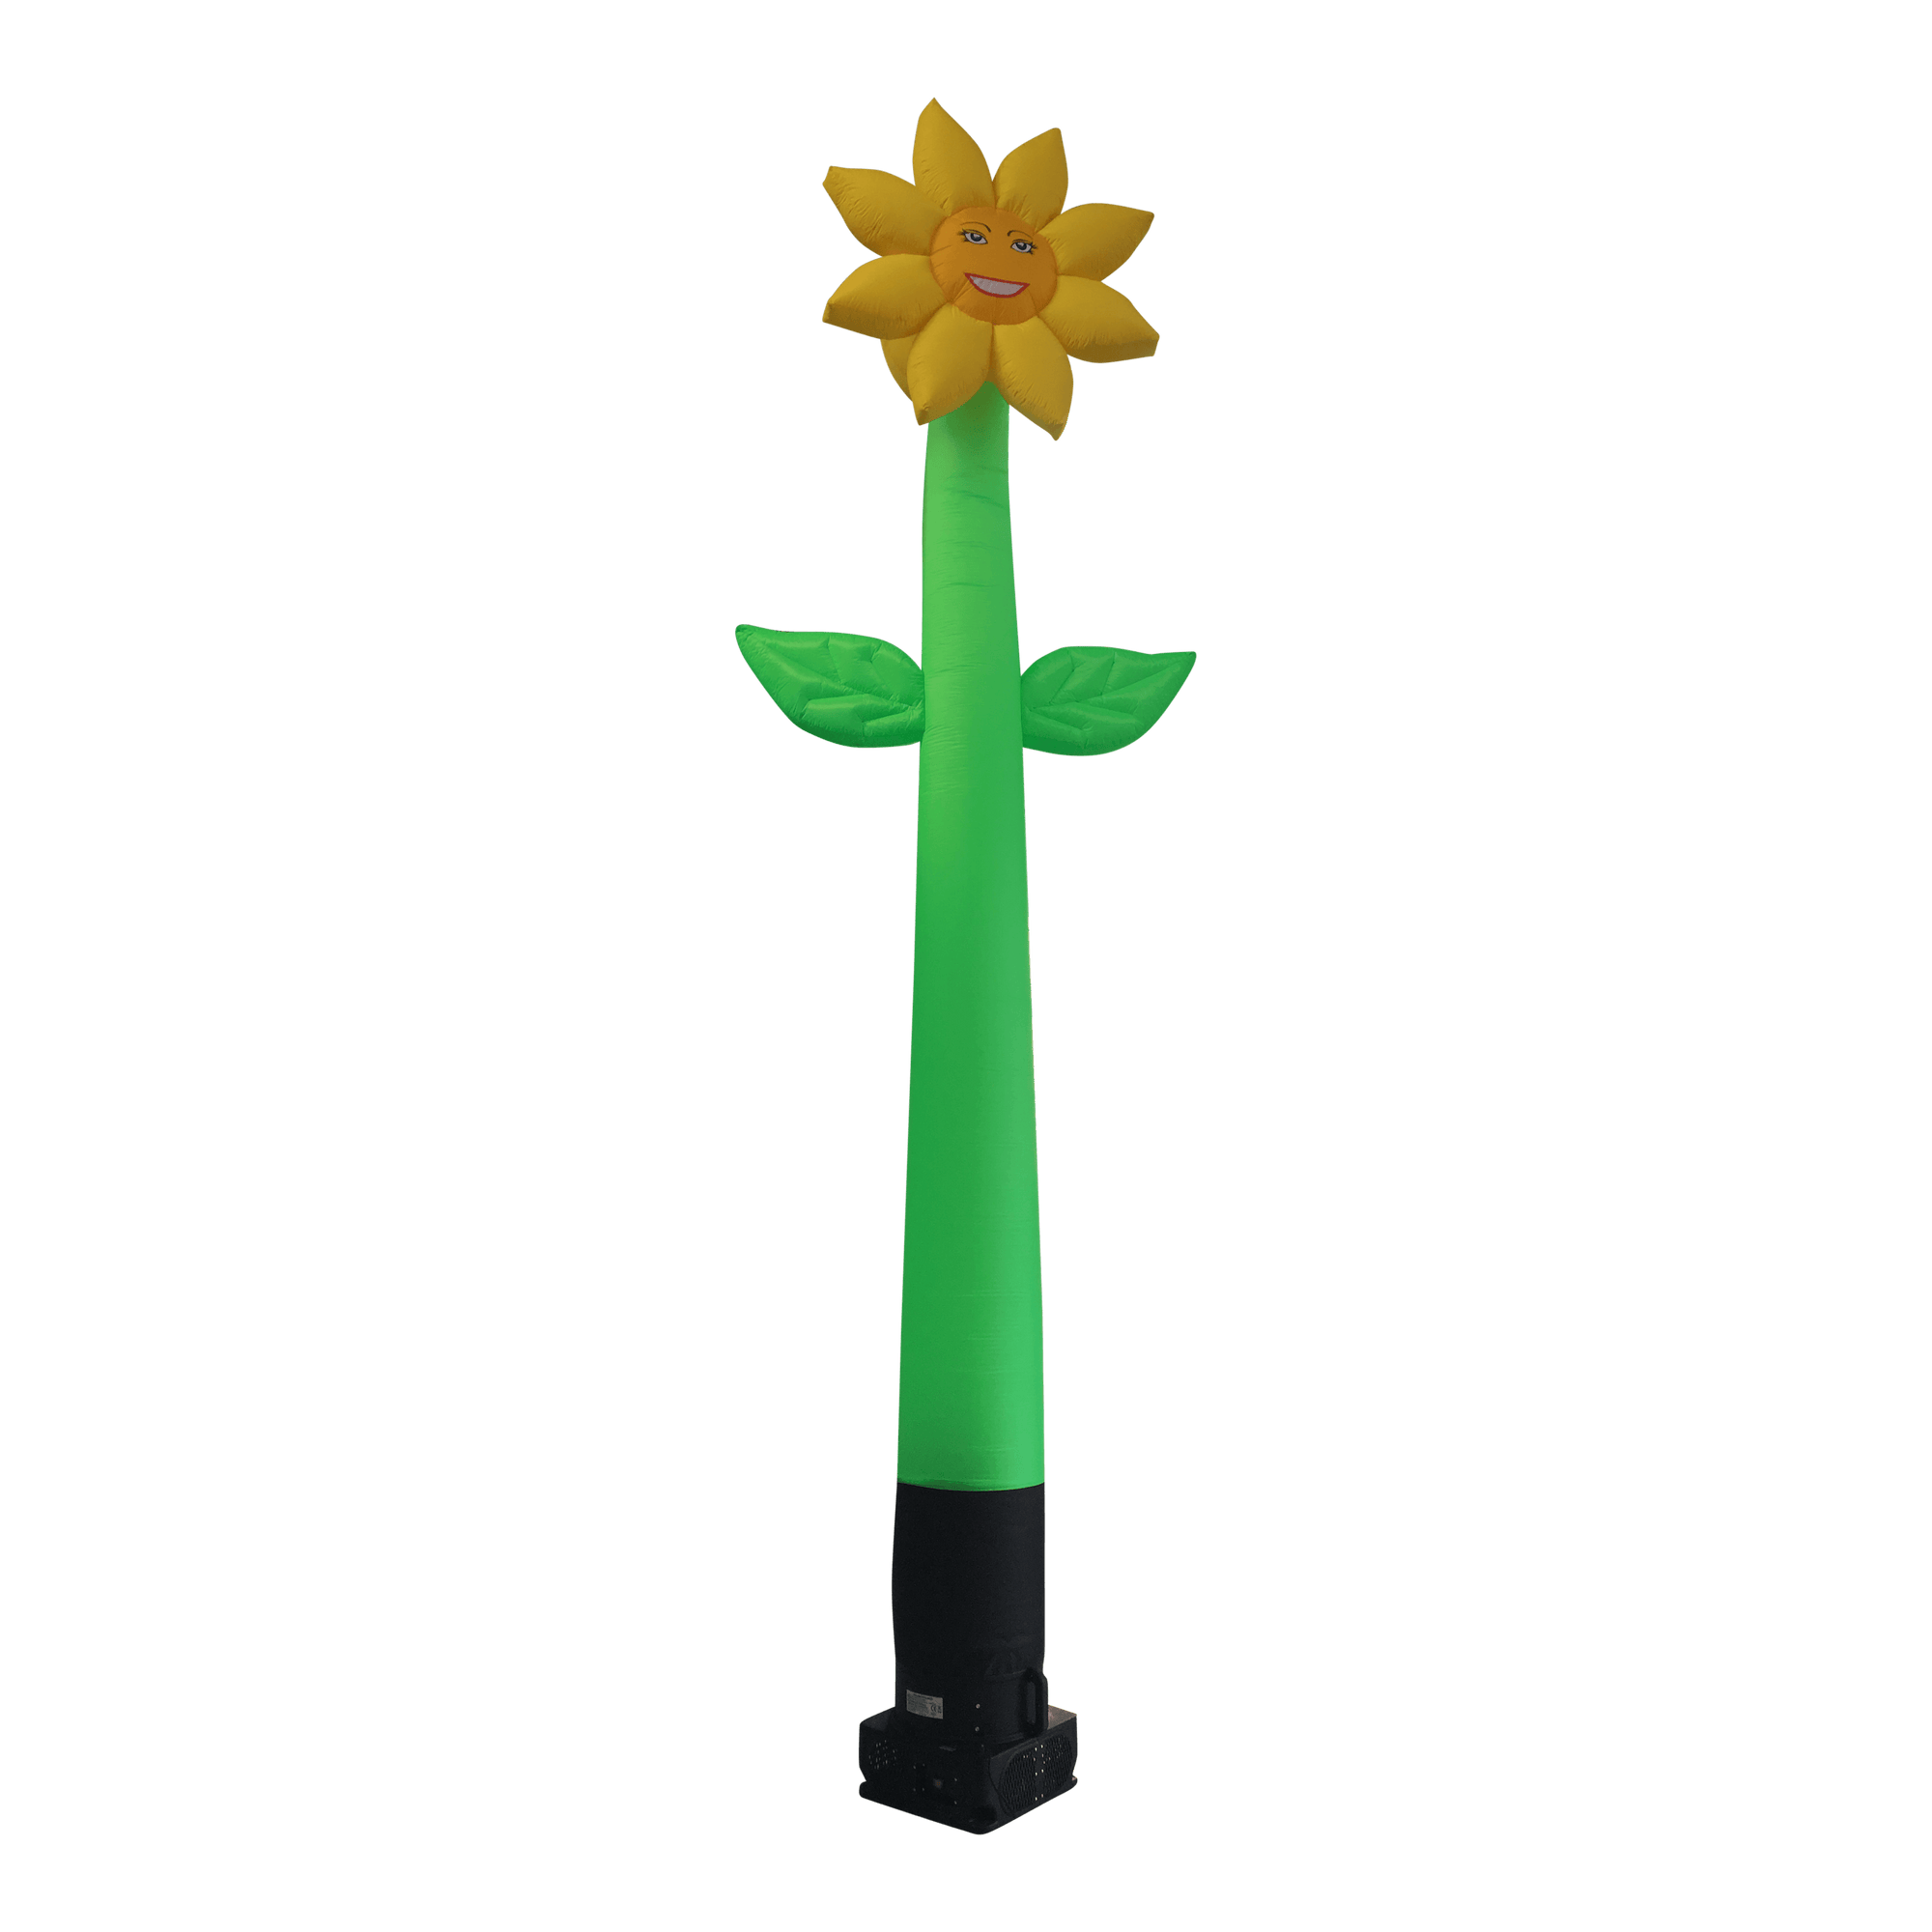 FLOWER Skytube / flower shaped Airdancer 4 m (13 ft) standard green/yellow - Inflatable24.com